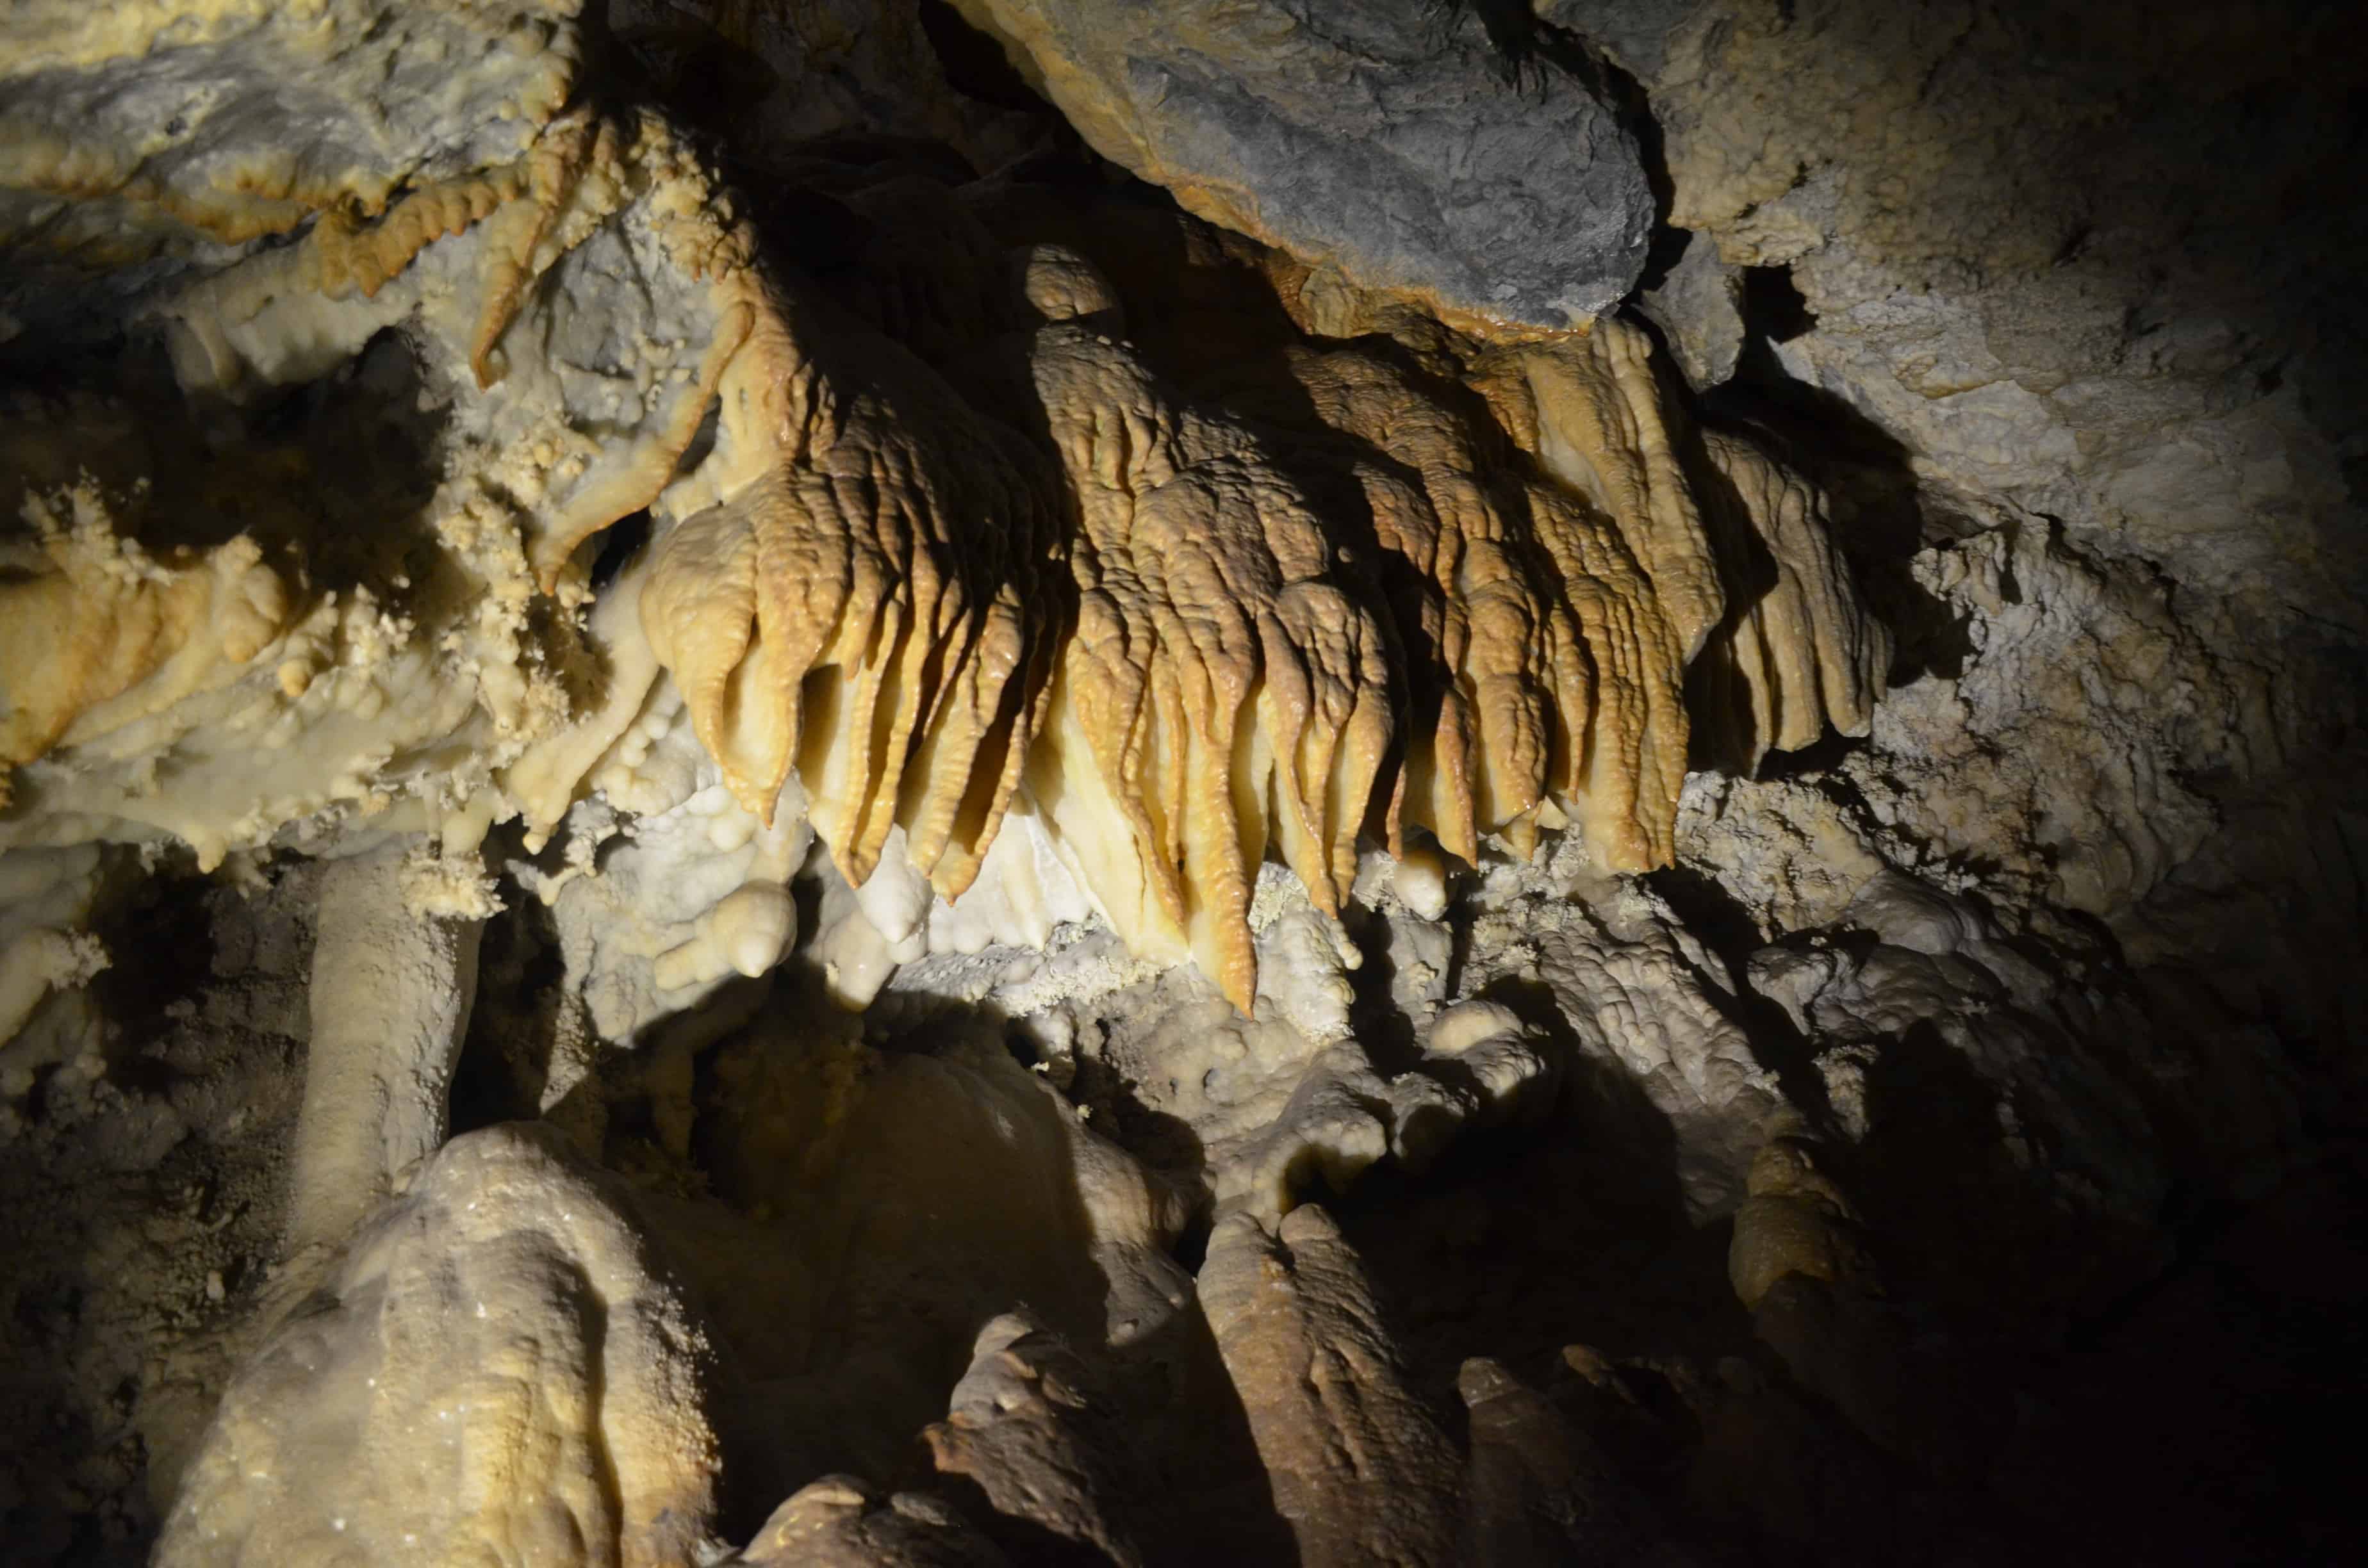 Cave formations at Timpanogos Cave National Monument, Utah